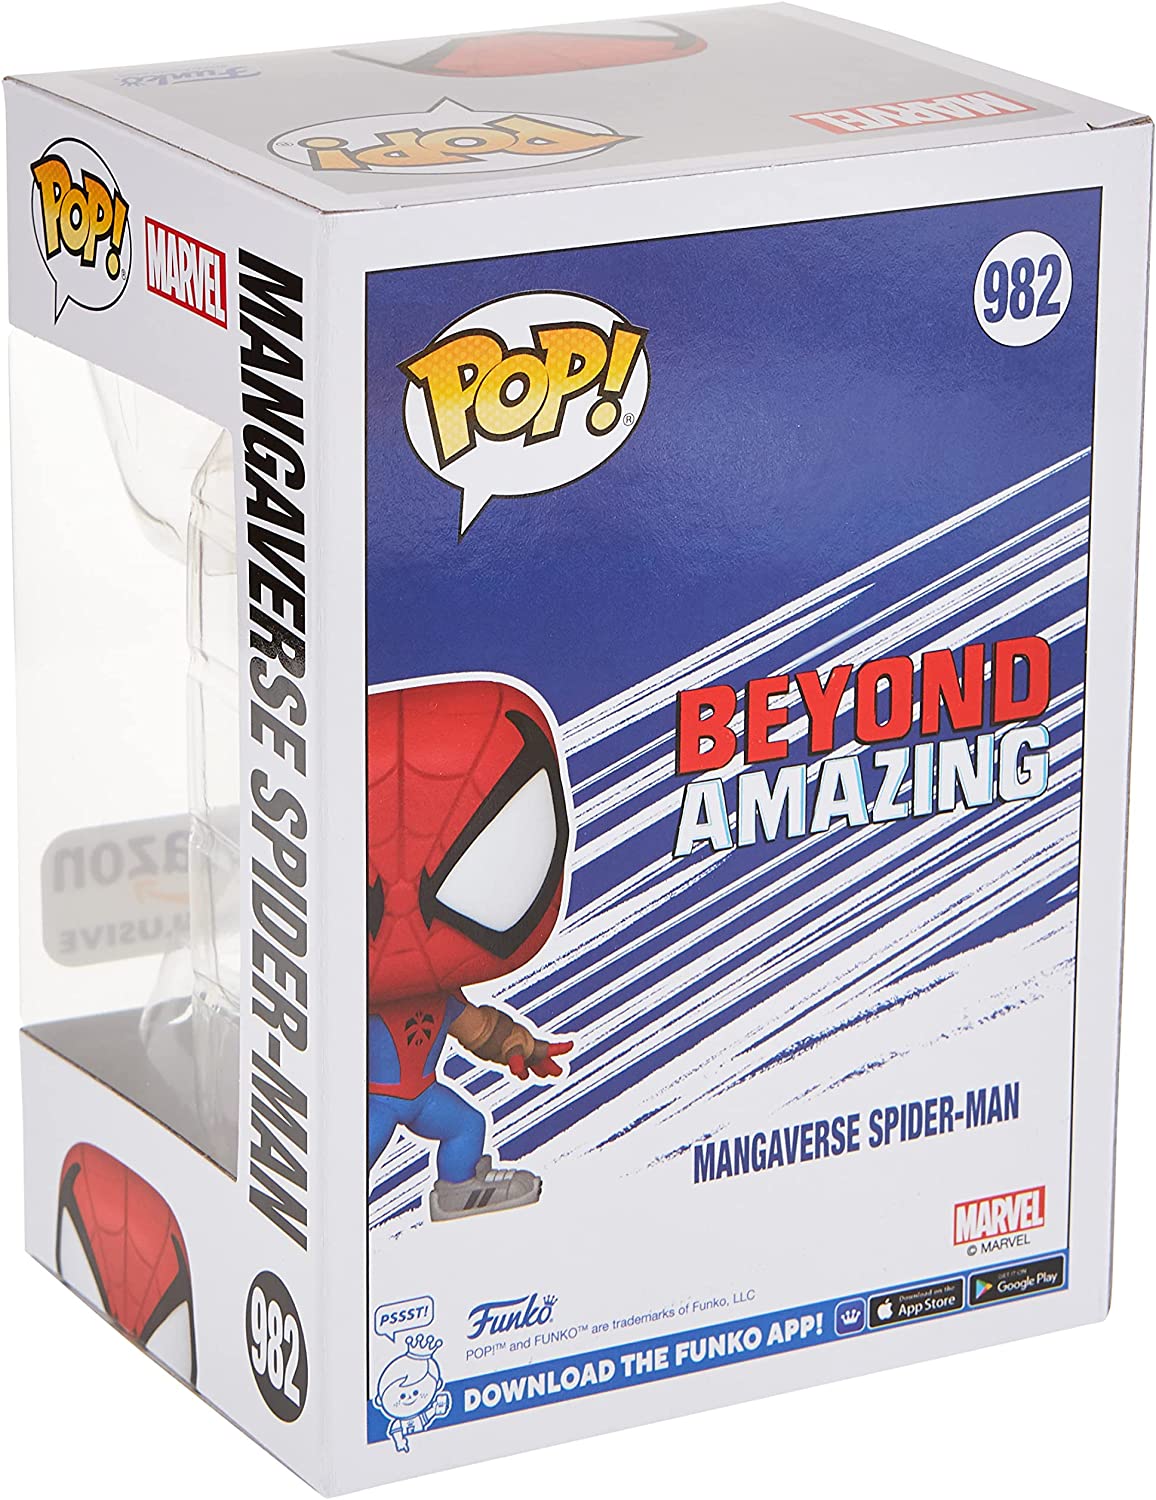 Funko Pop Marvel: SpiderMan - Mangaverse Spider-Man